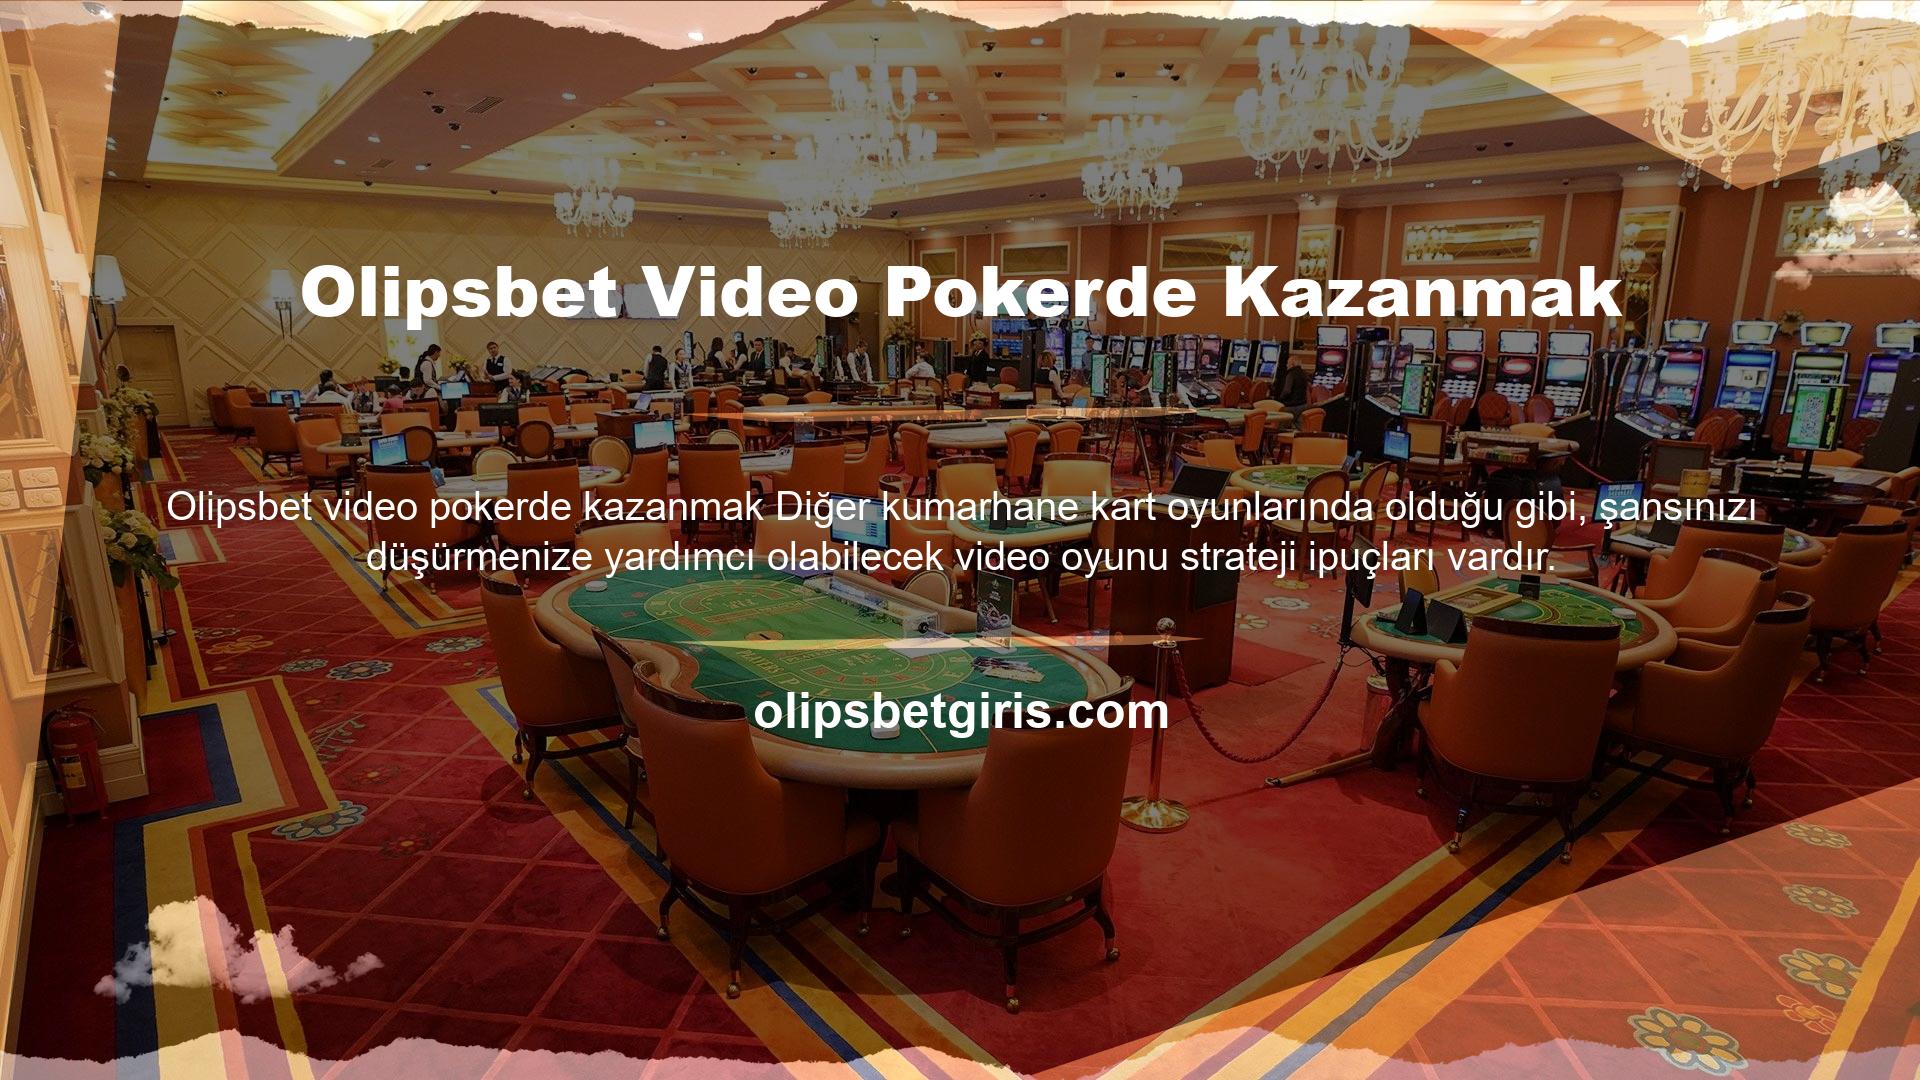 Olipsbet Video Pokerde Kazanmak